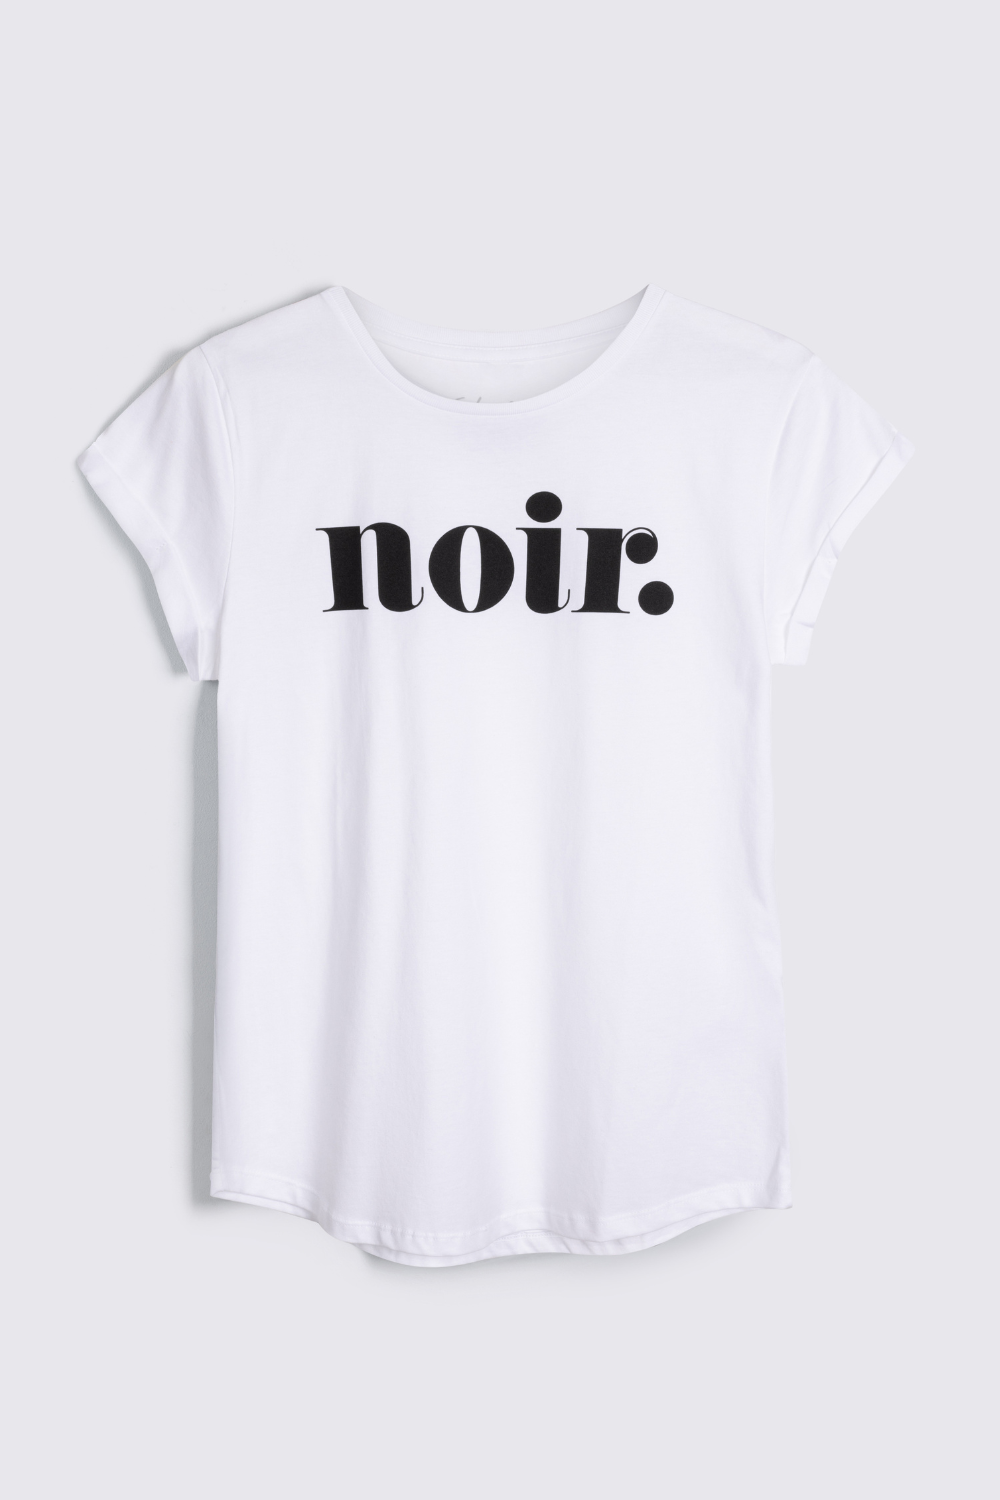 noir neat fit t-shirt white t-shirt slogan t-shirt eleven loves ellen loves 11 loves